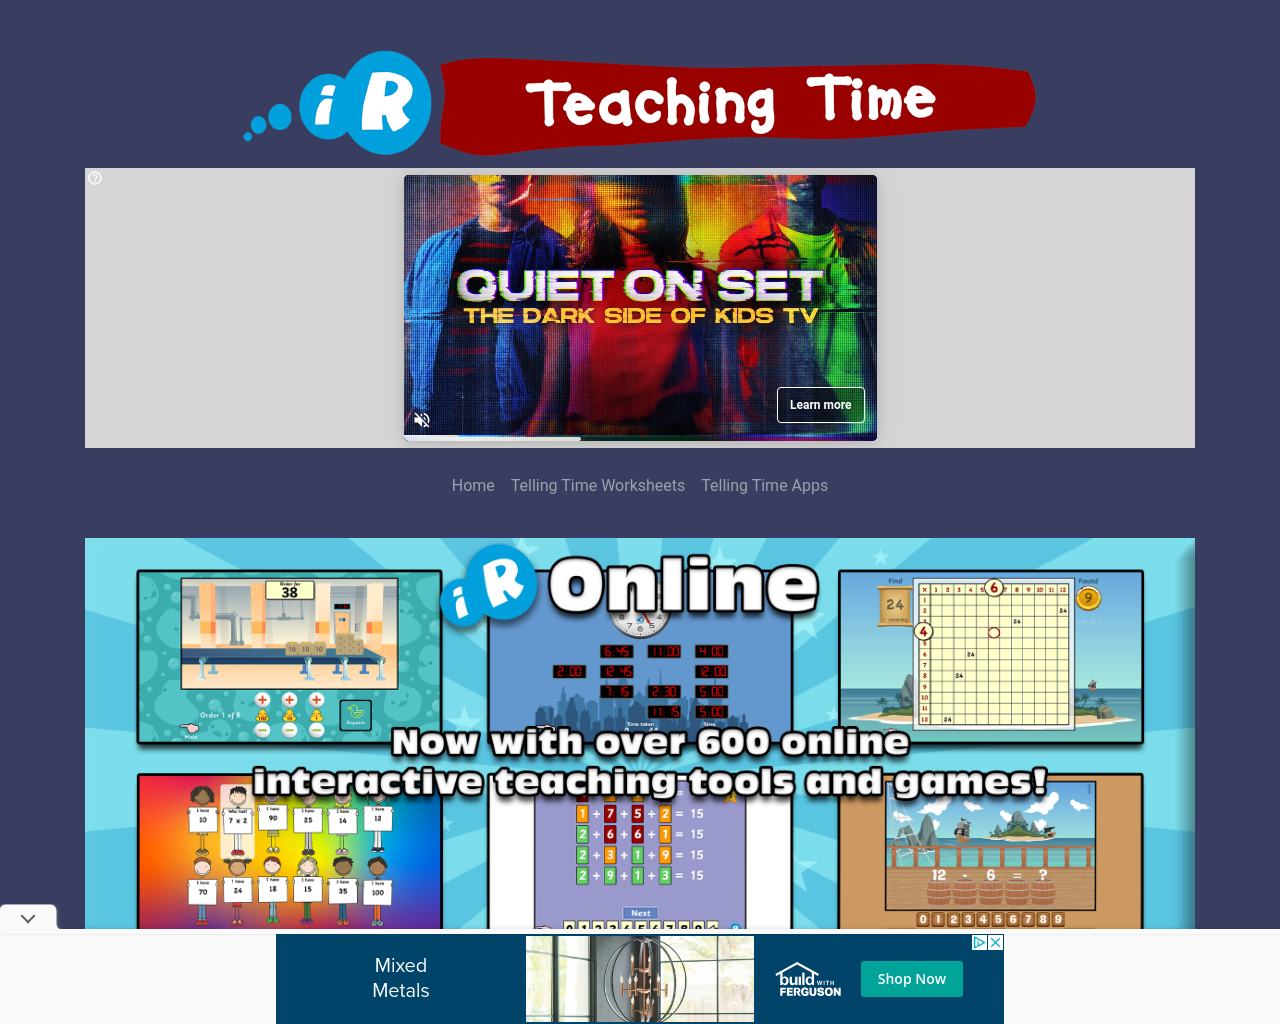 Teaching Time